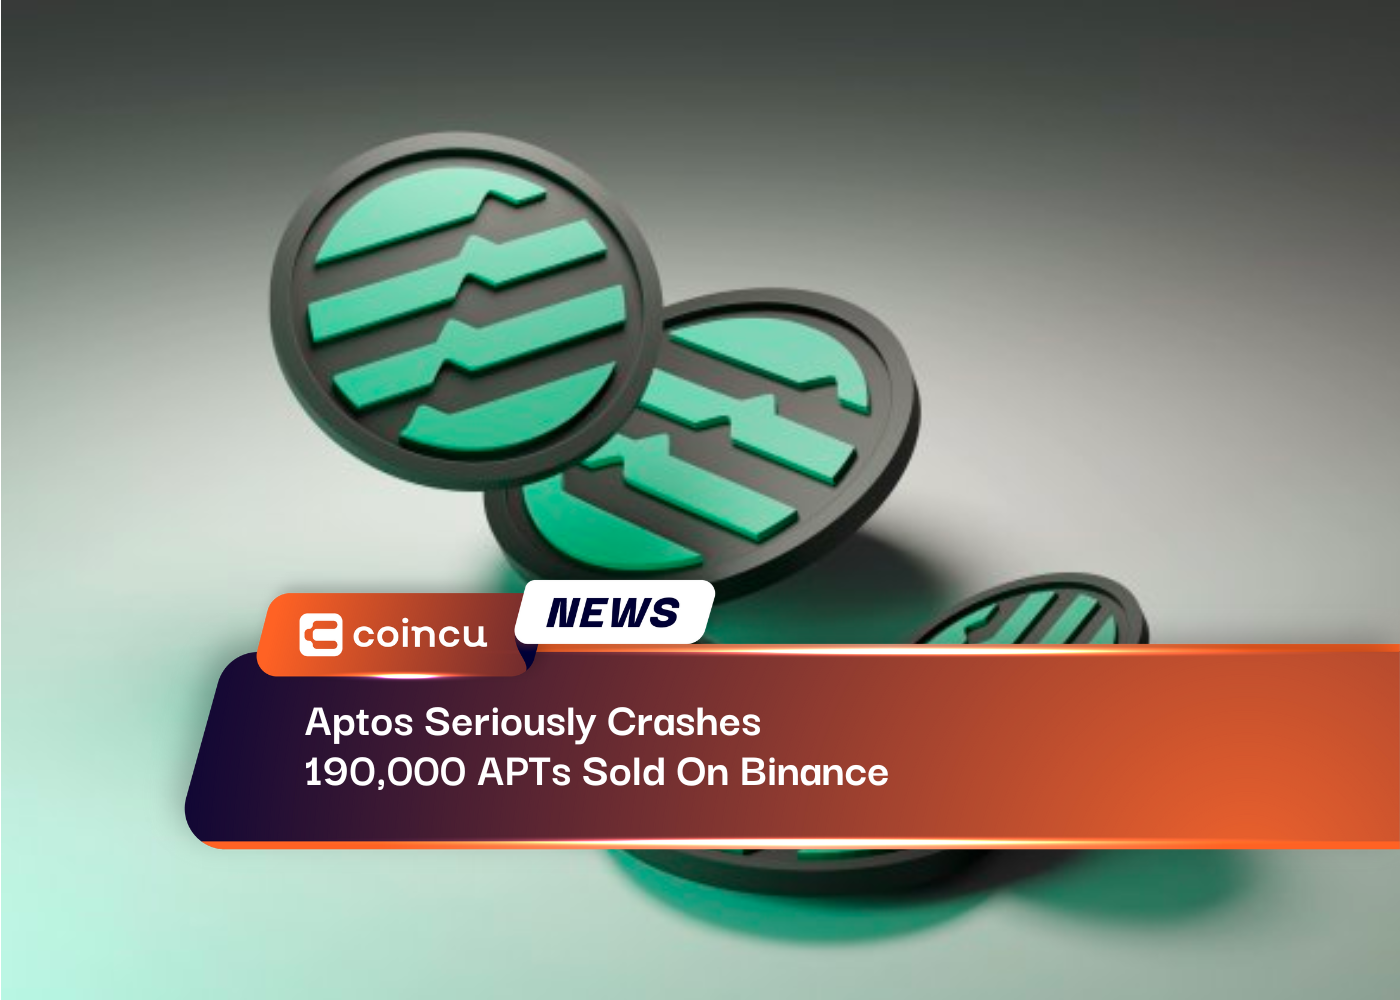 Aptos trava seriamente 190,000 APTs vendidos na Binance